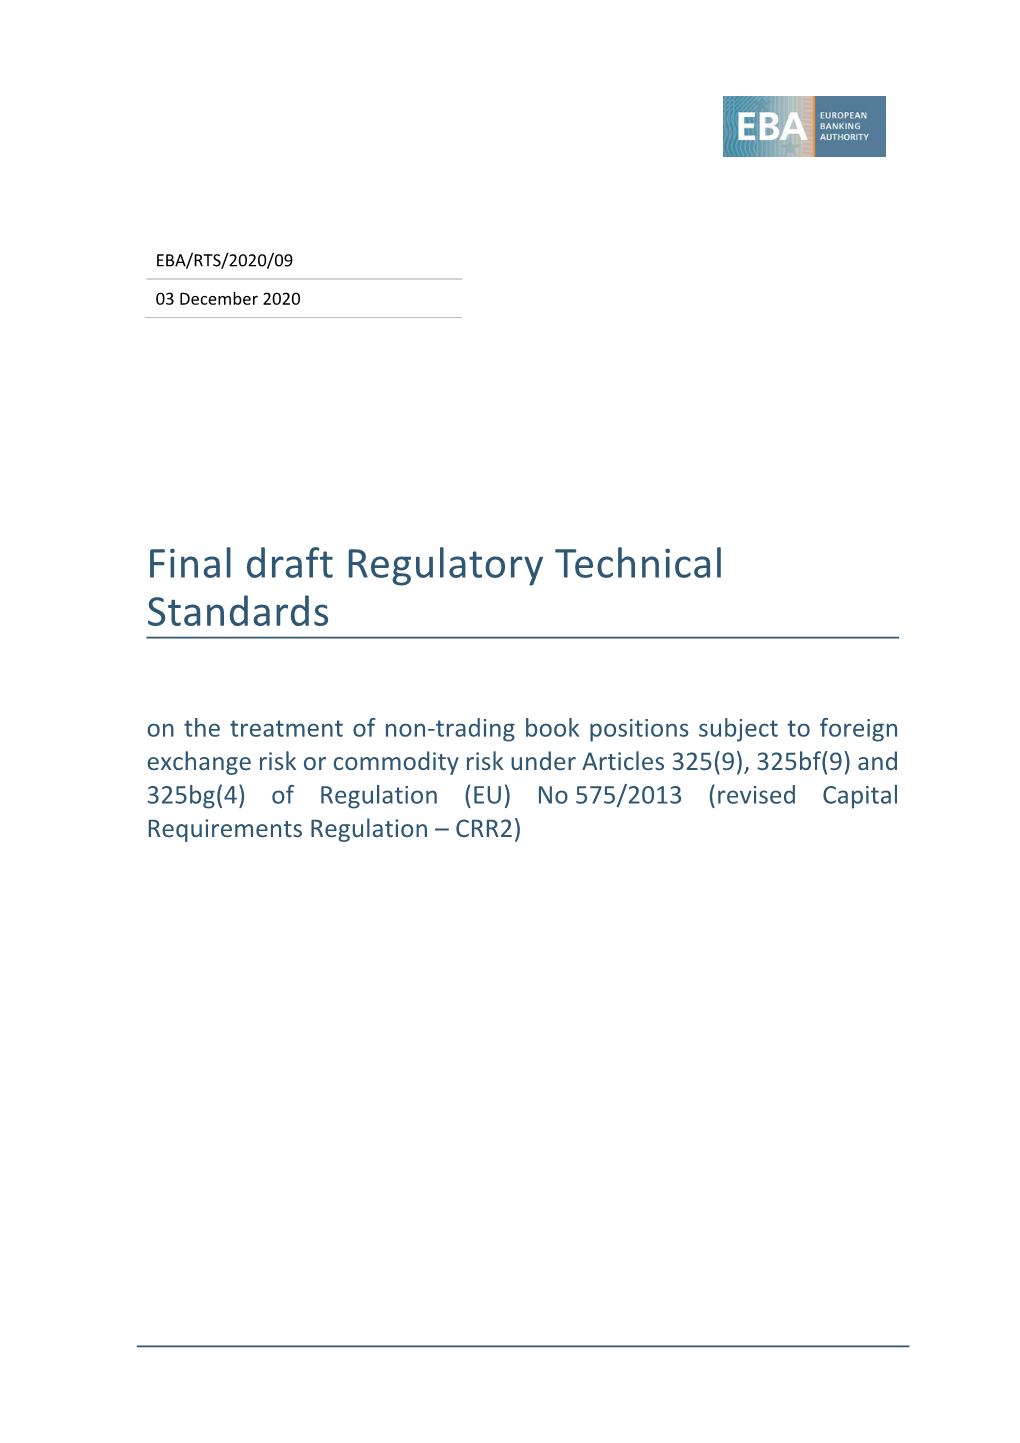 Final Draft Regulatory Technical Standards (RTS)